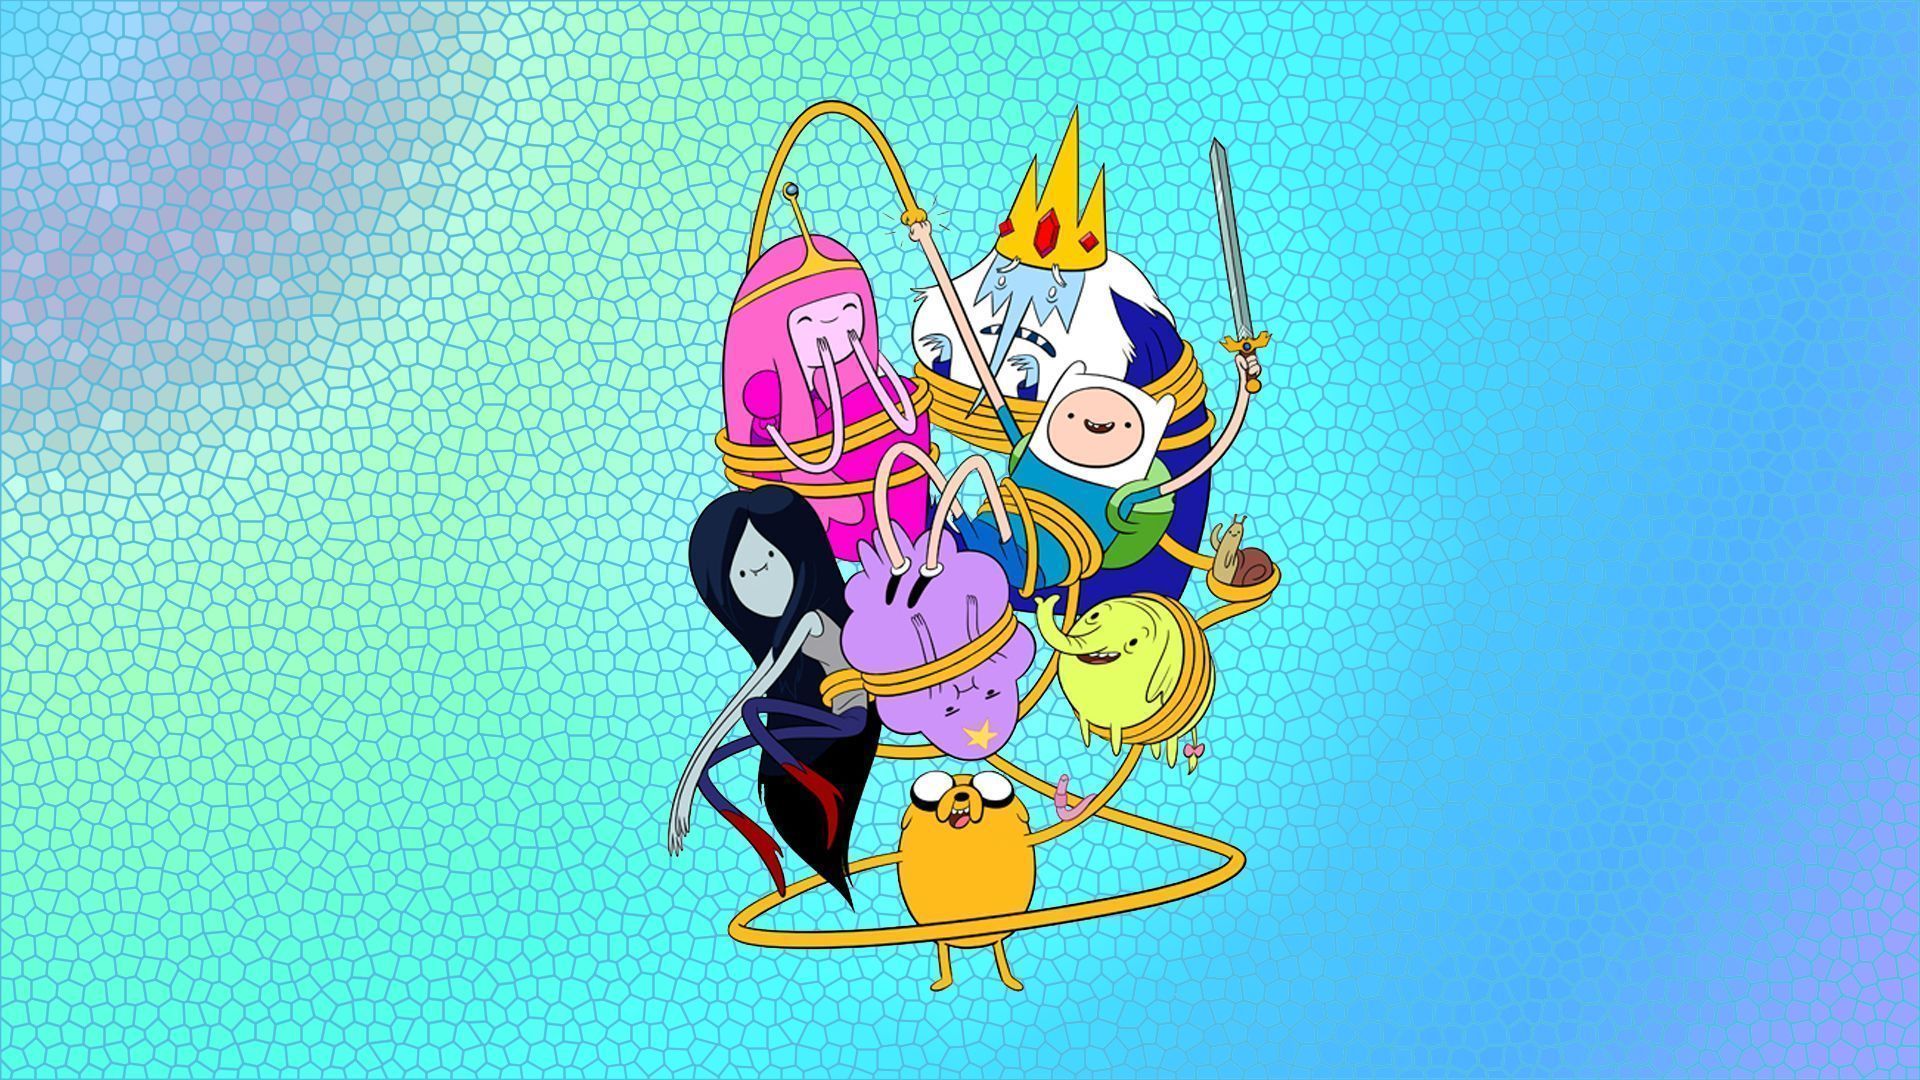 Adventure Time wallpaper 1920x1080 - Cartoon Network - TV Series - Finn the Human - Jake the Dog - Princess Bubblegum - BMO - Lumpy Space Princess - Marceline the Vampire Queen - - Adventure Time